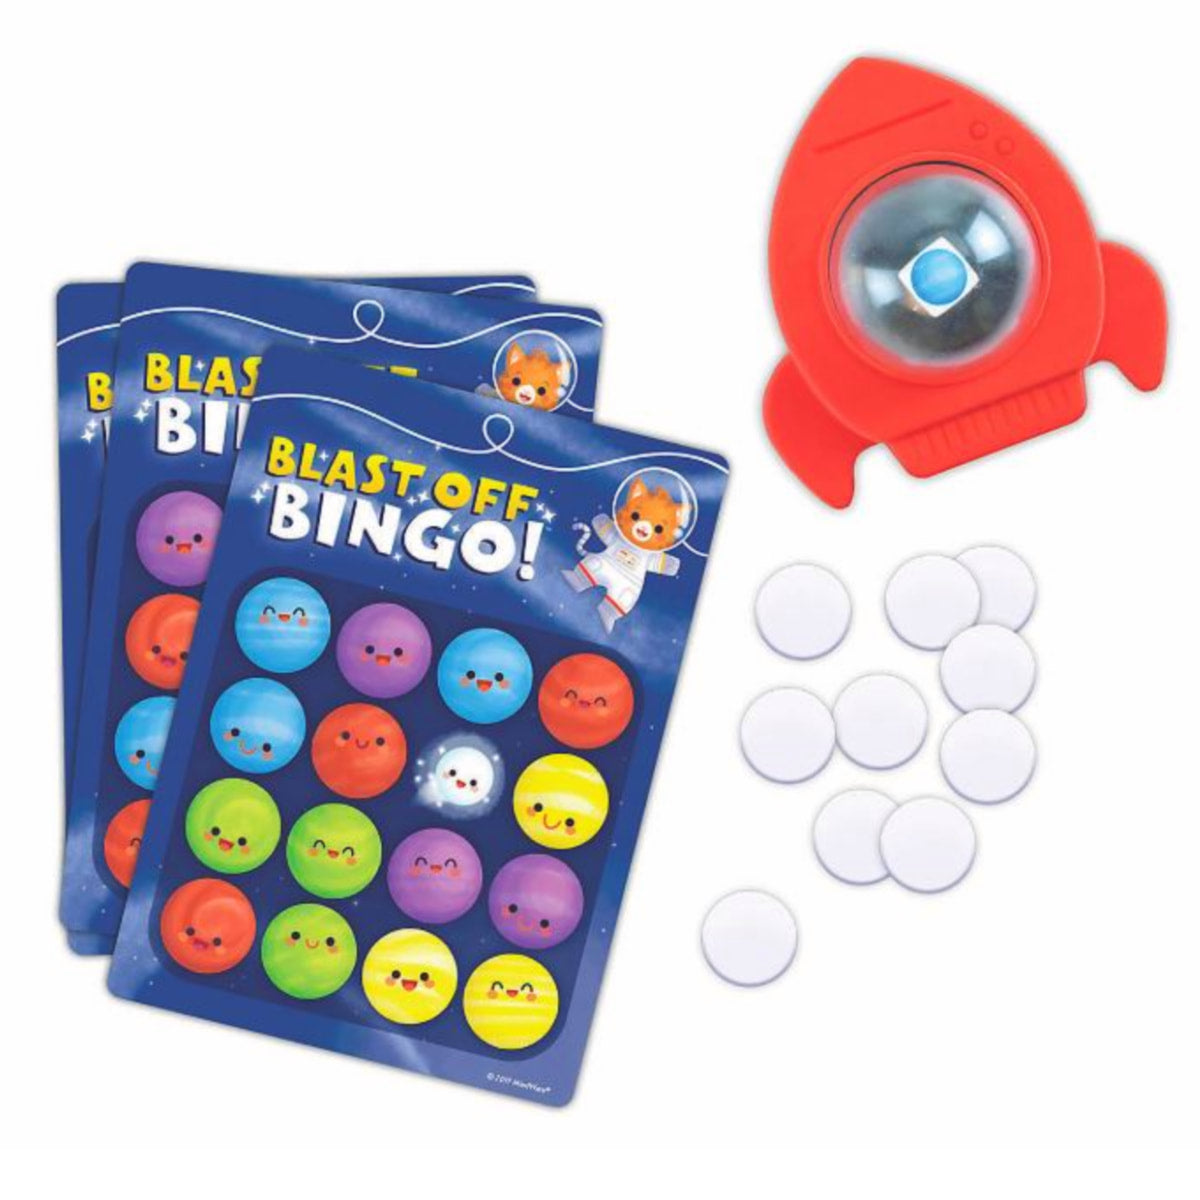 Peaceable Kingdom Game - Blast Off Bingo